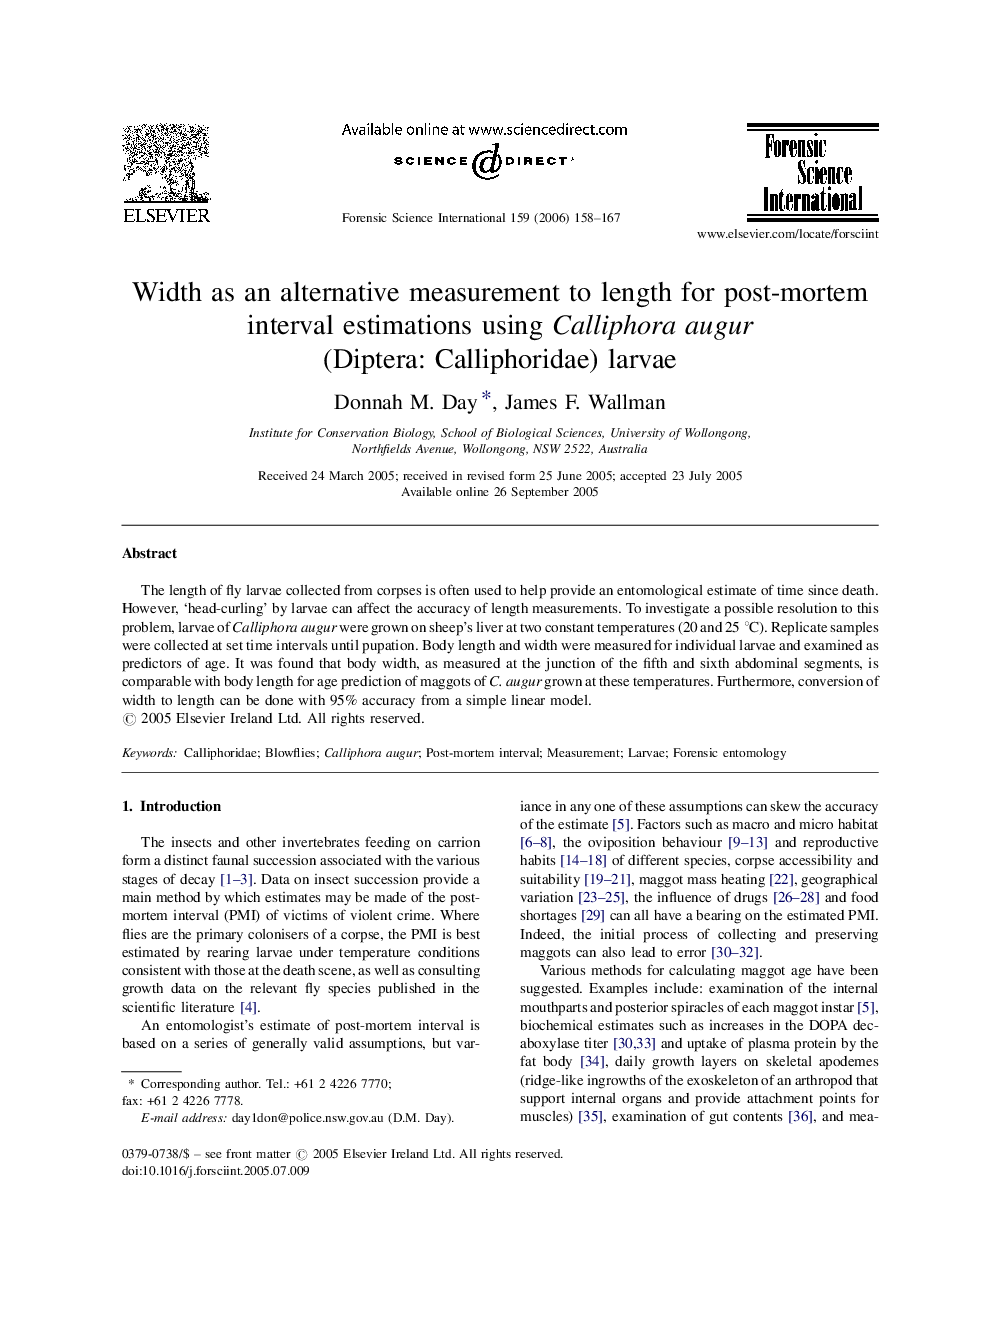 Width as an alternative measurement to length for post-mortem interval estimations using Calliphora augur (Diptera: Calliphoridae) larvae